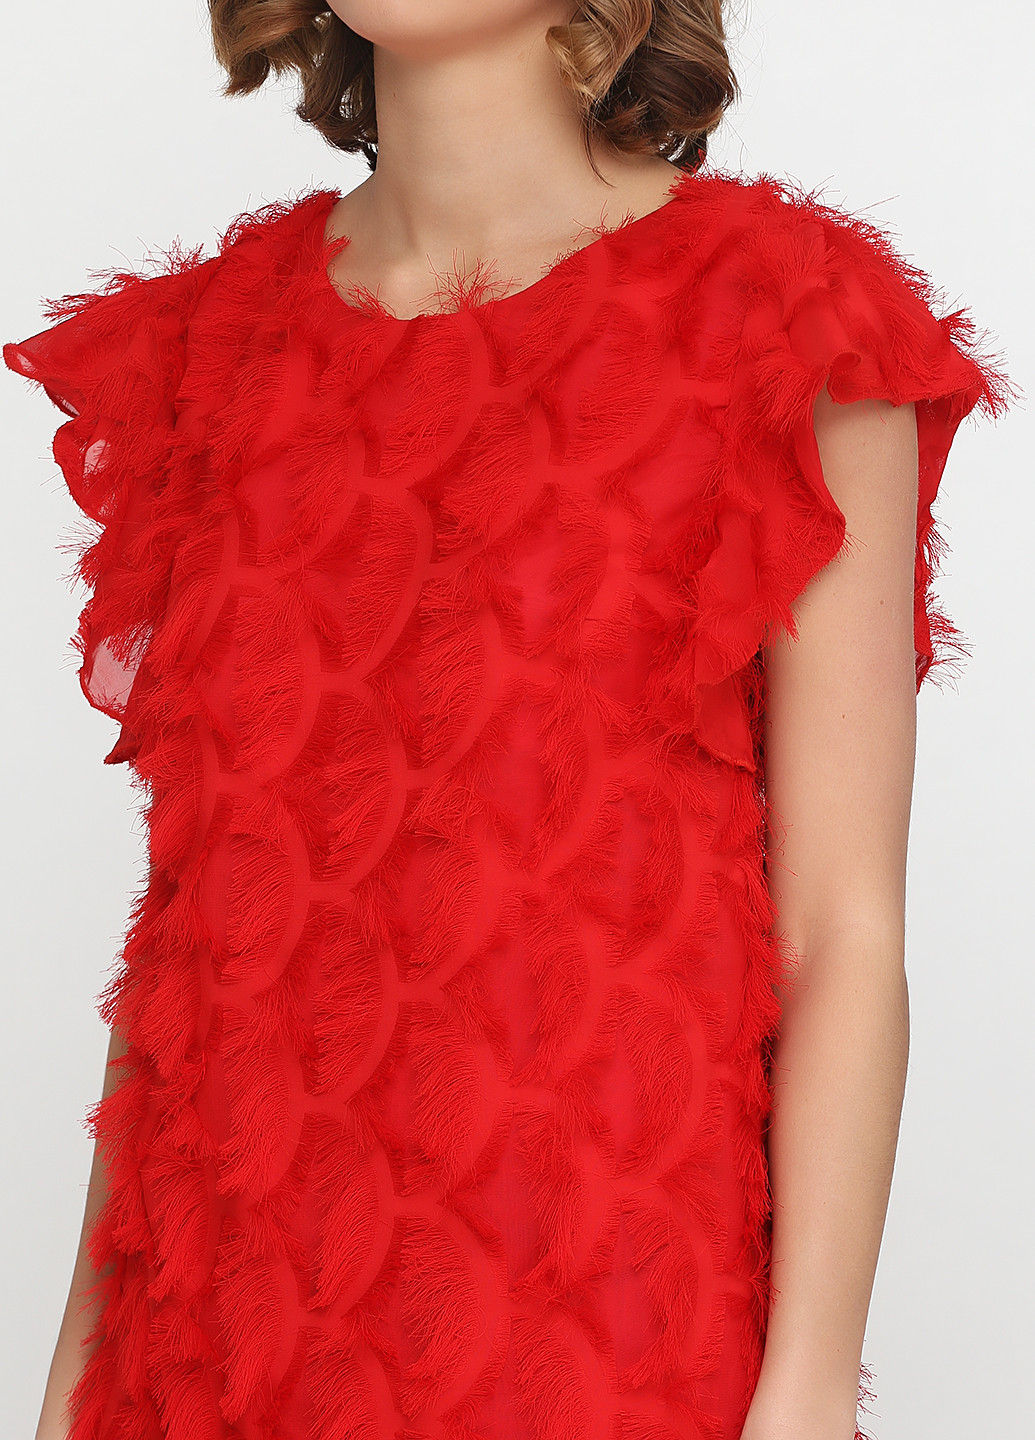 Красное коктейльное платье Sonetti фактурное